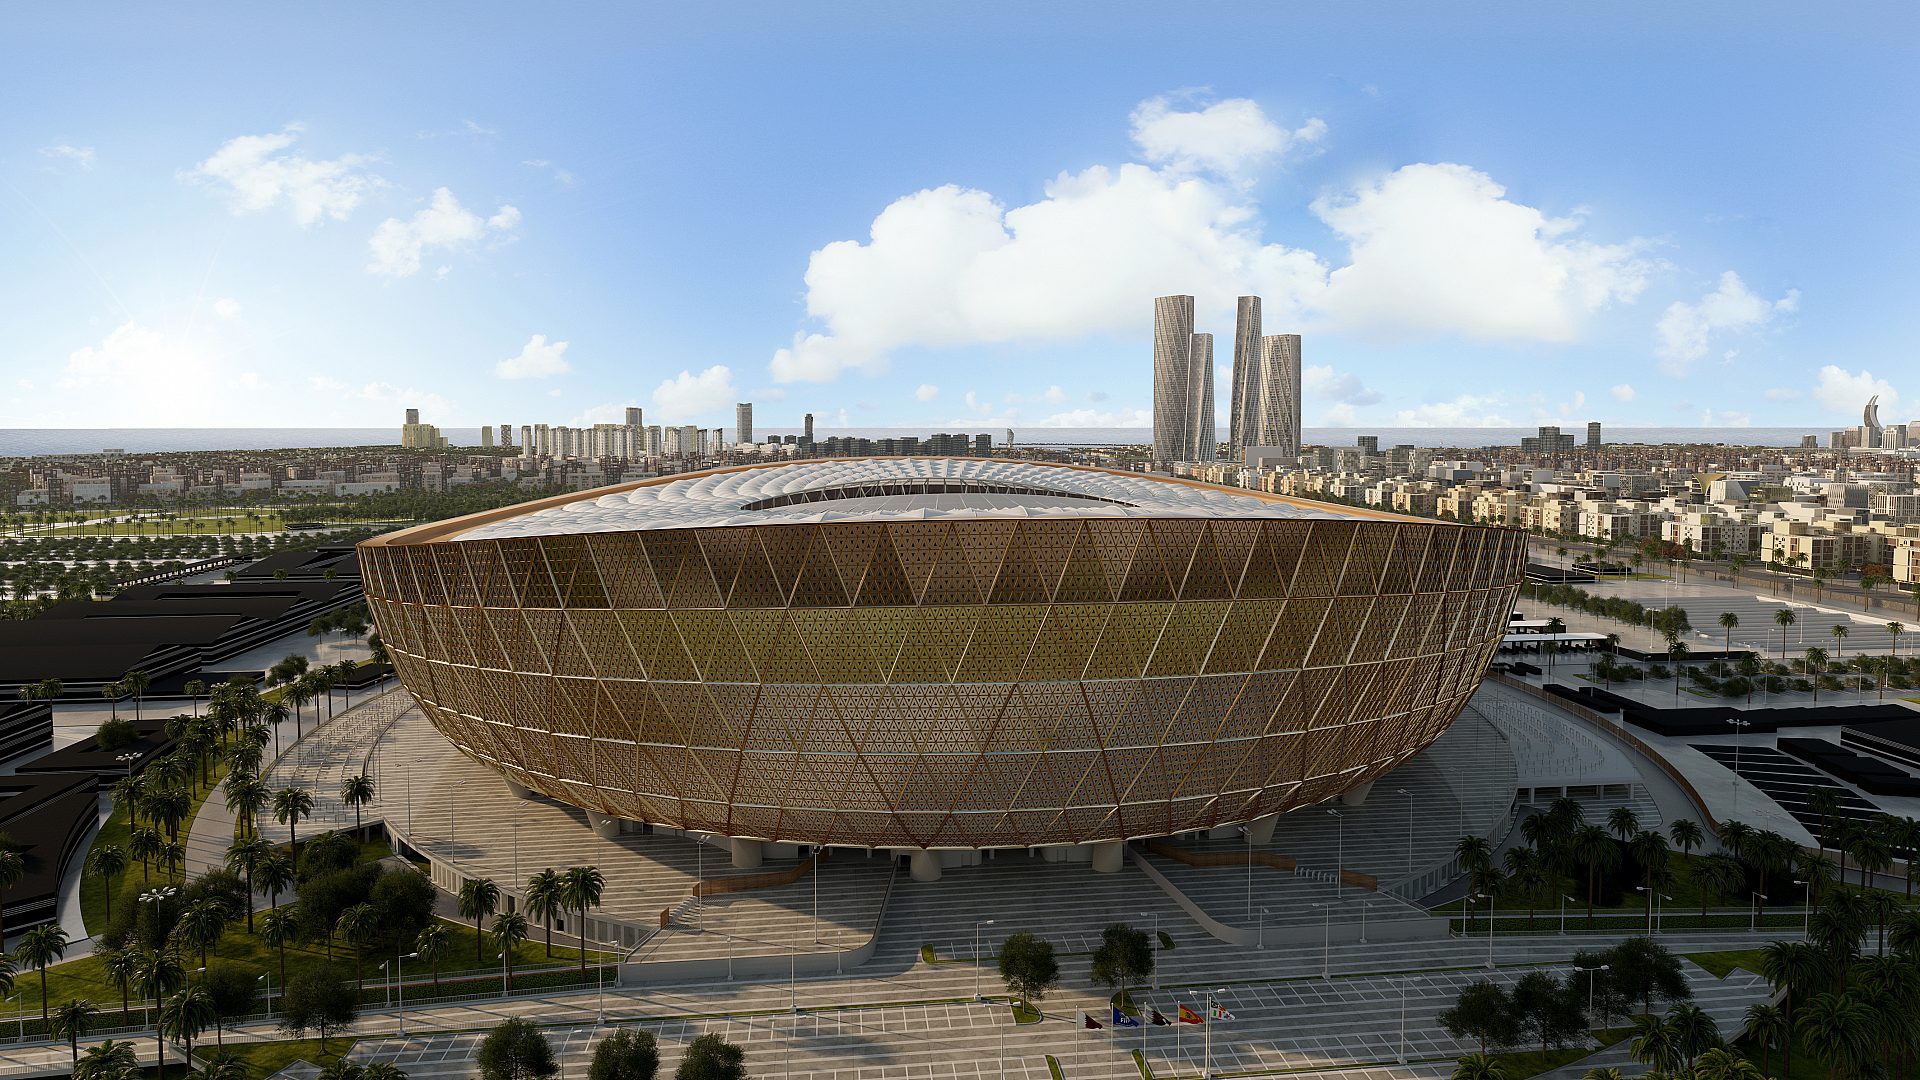 Lusail Stadium to host Al Arabi vs Al Rayyan match on Aug 11